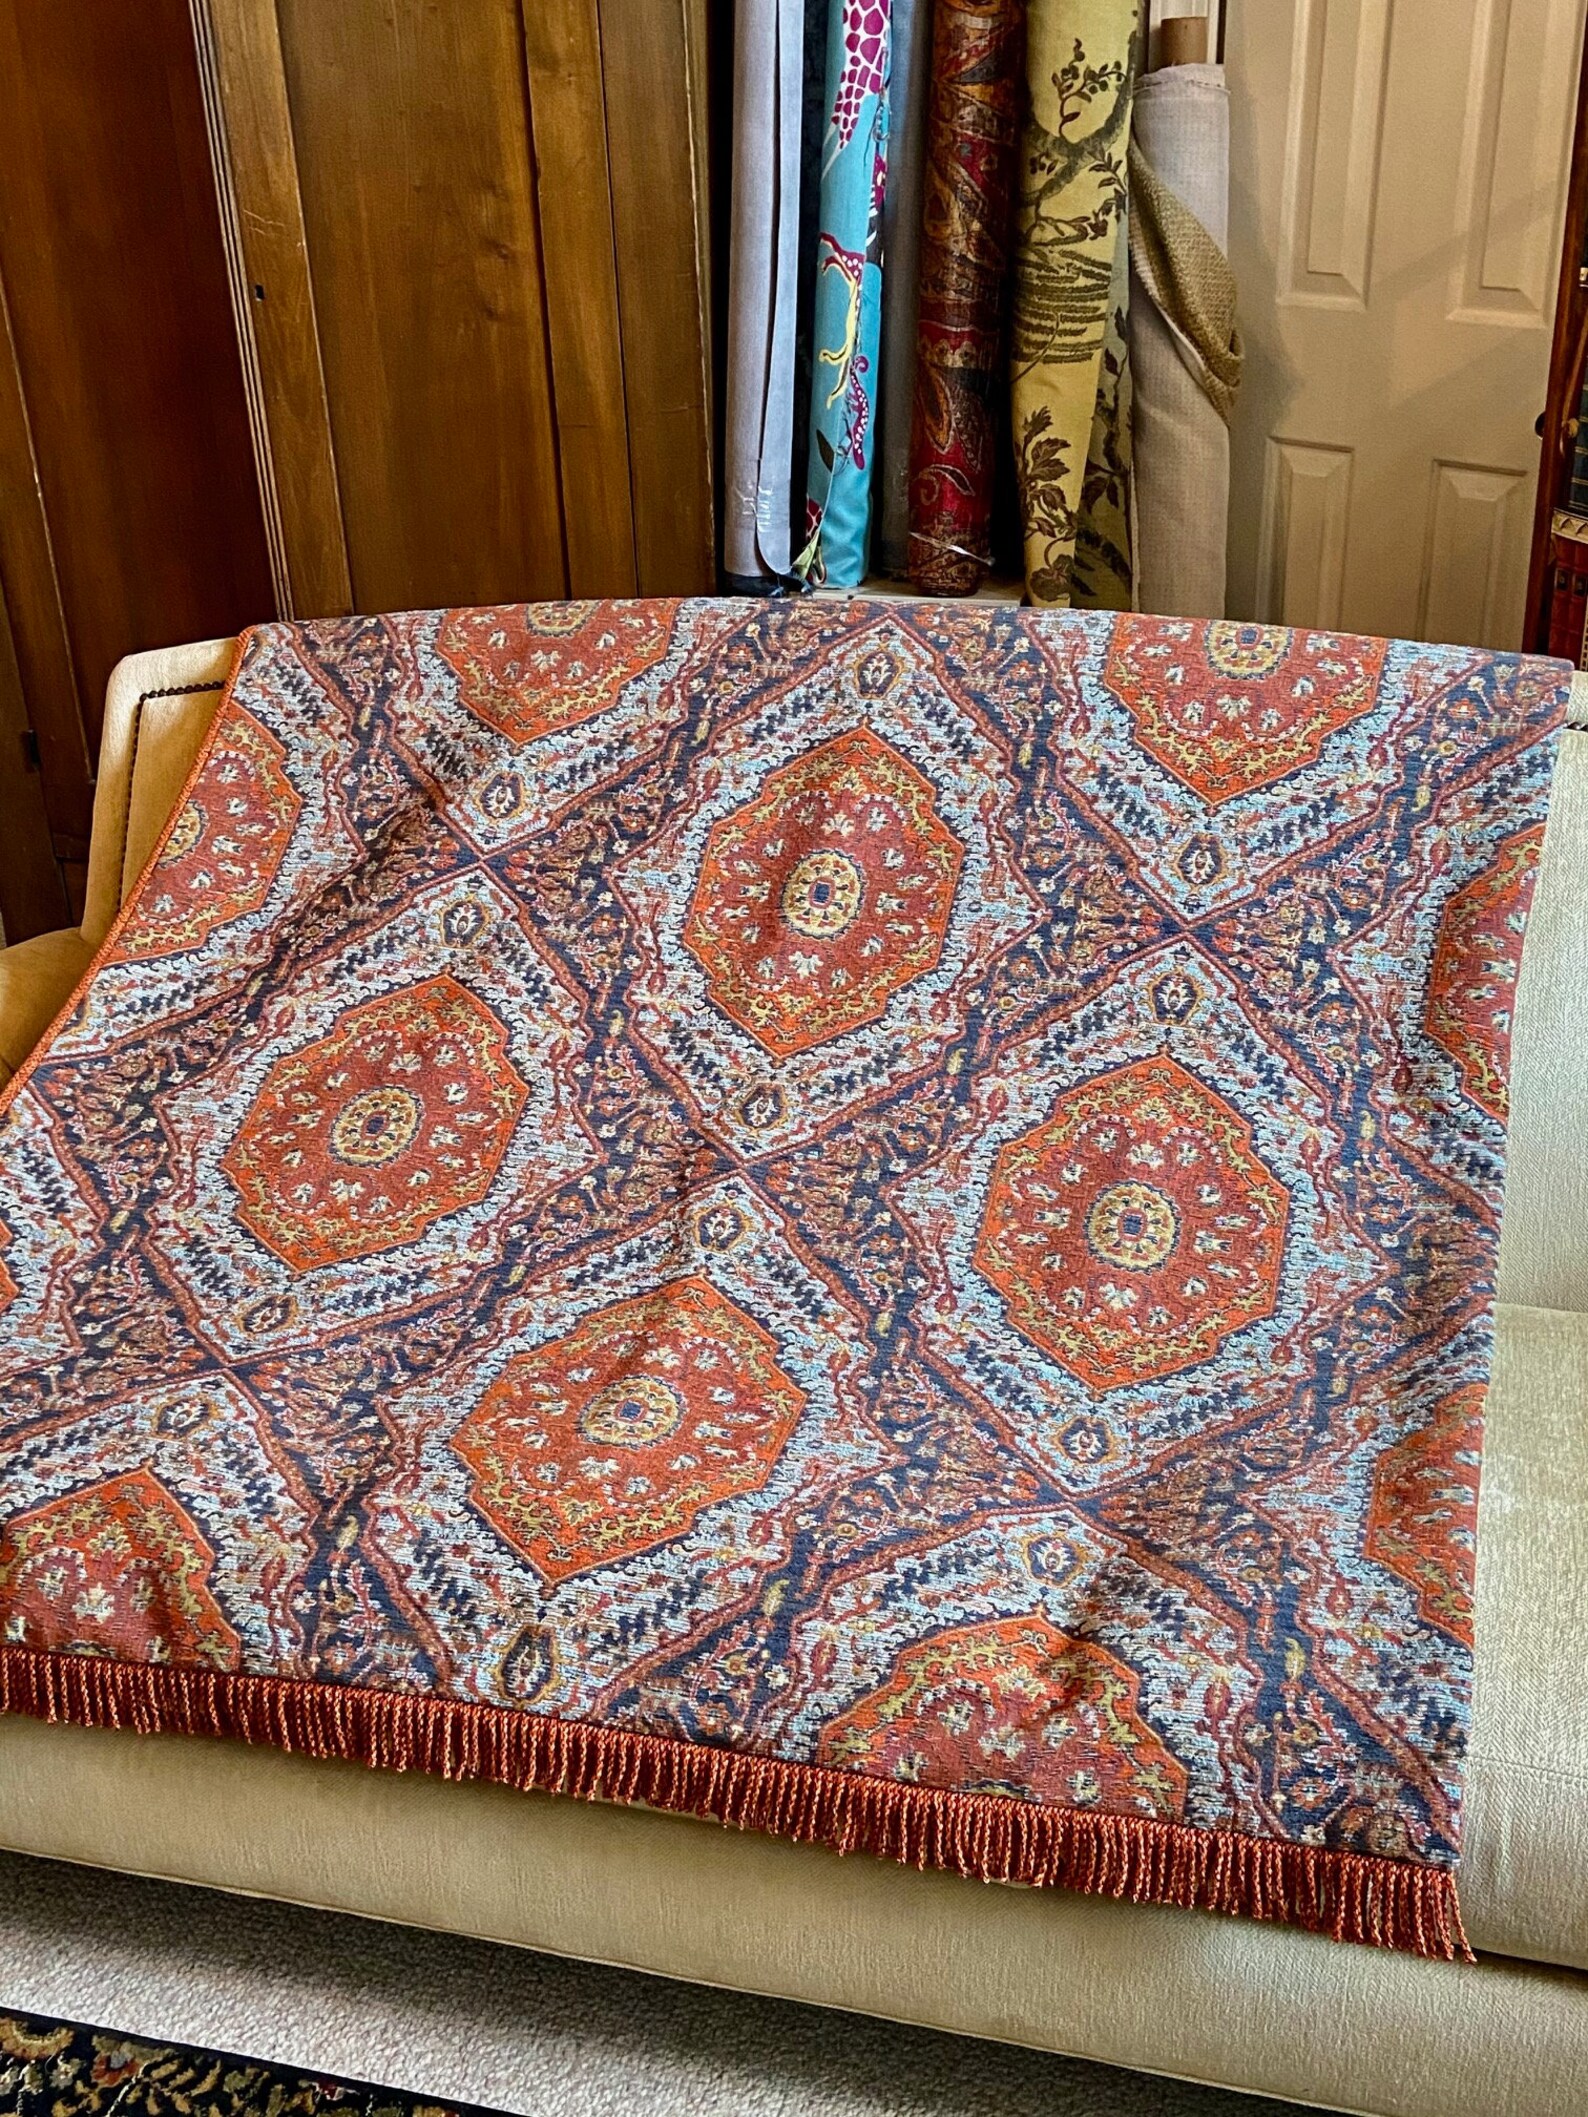 Moroccan Tapestry Throw Blanket Orange Blue Old World | Etsy